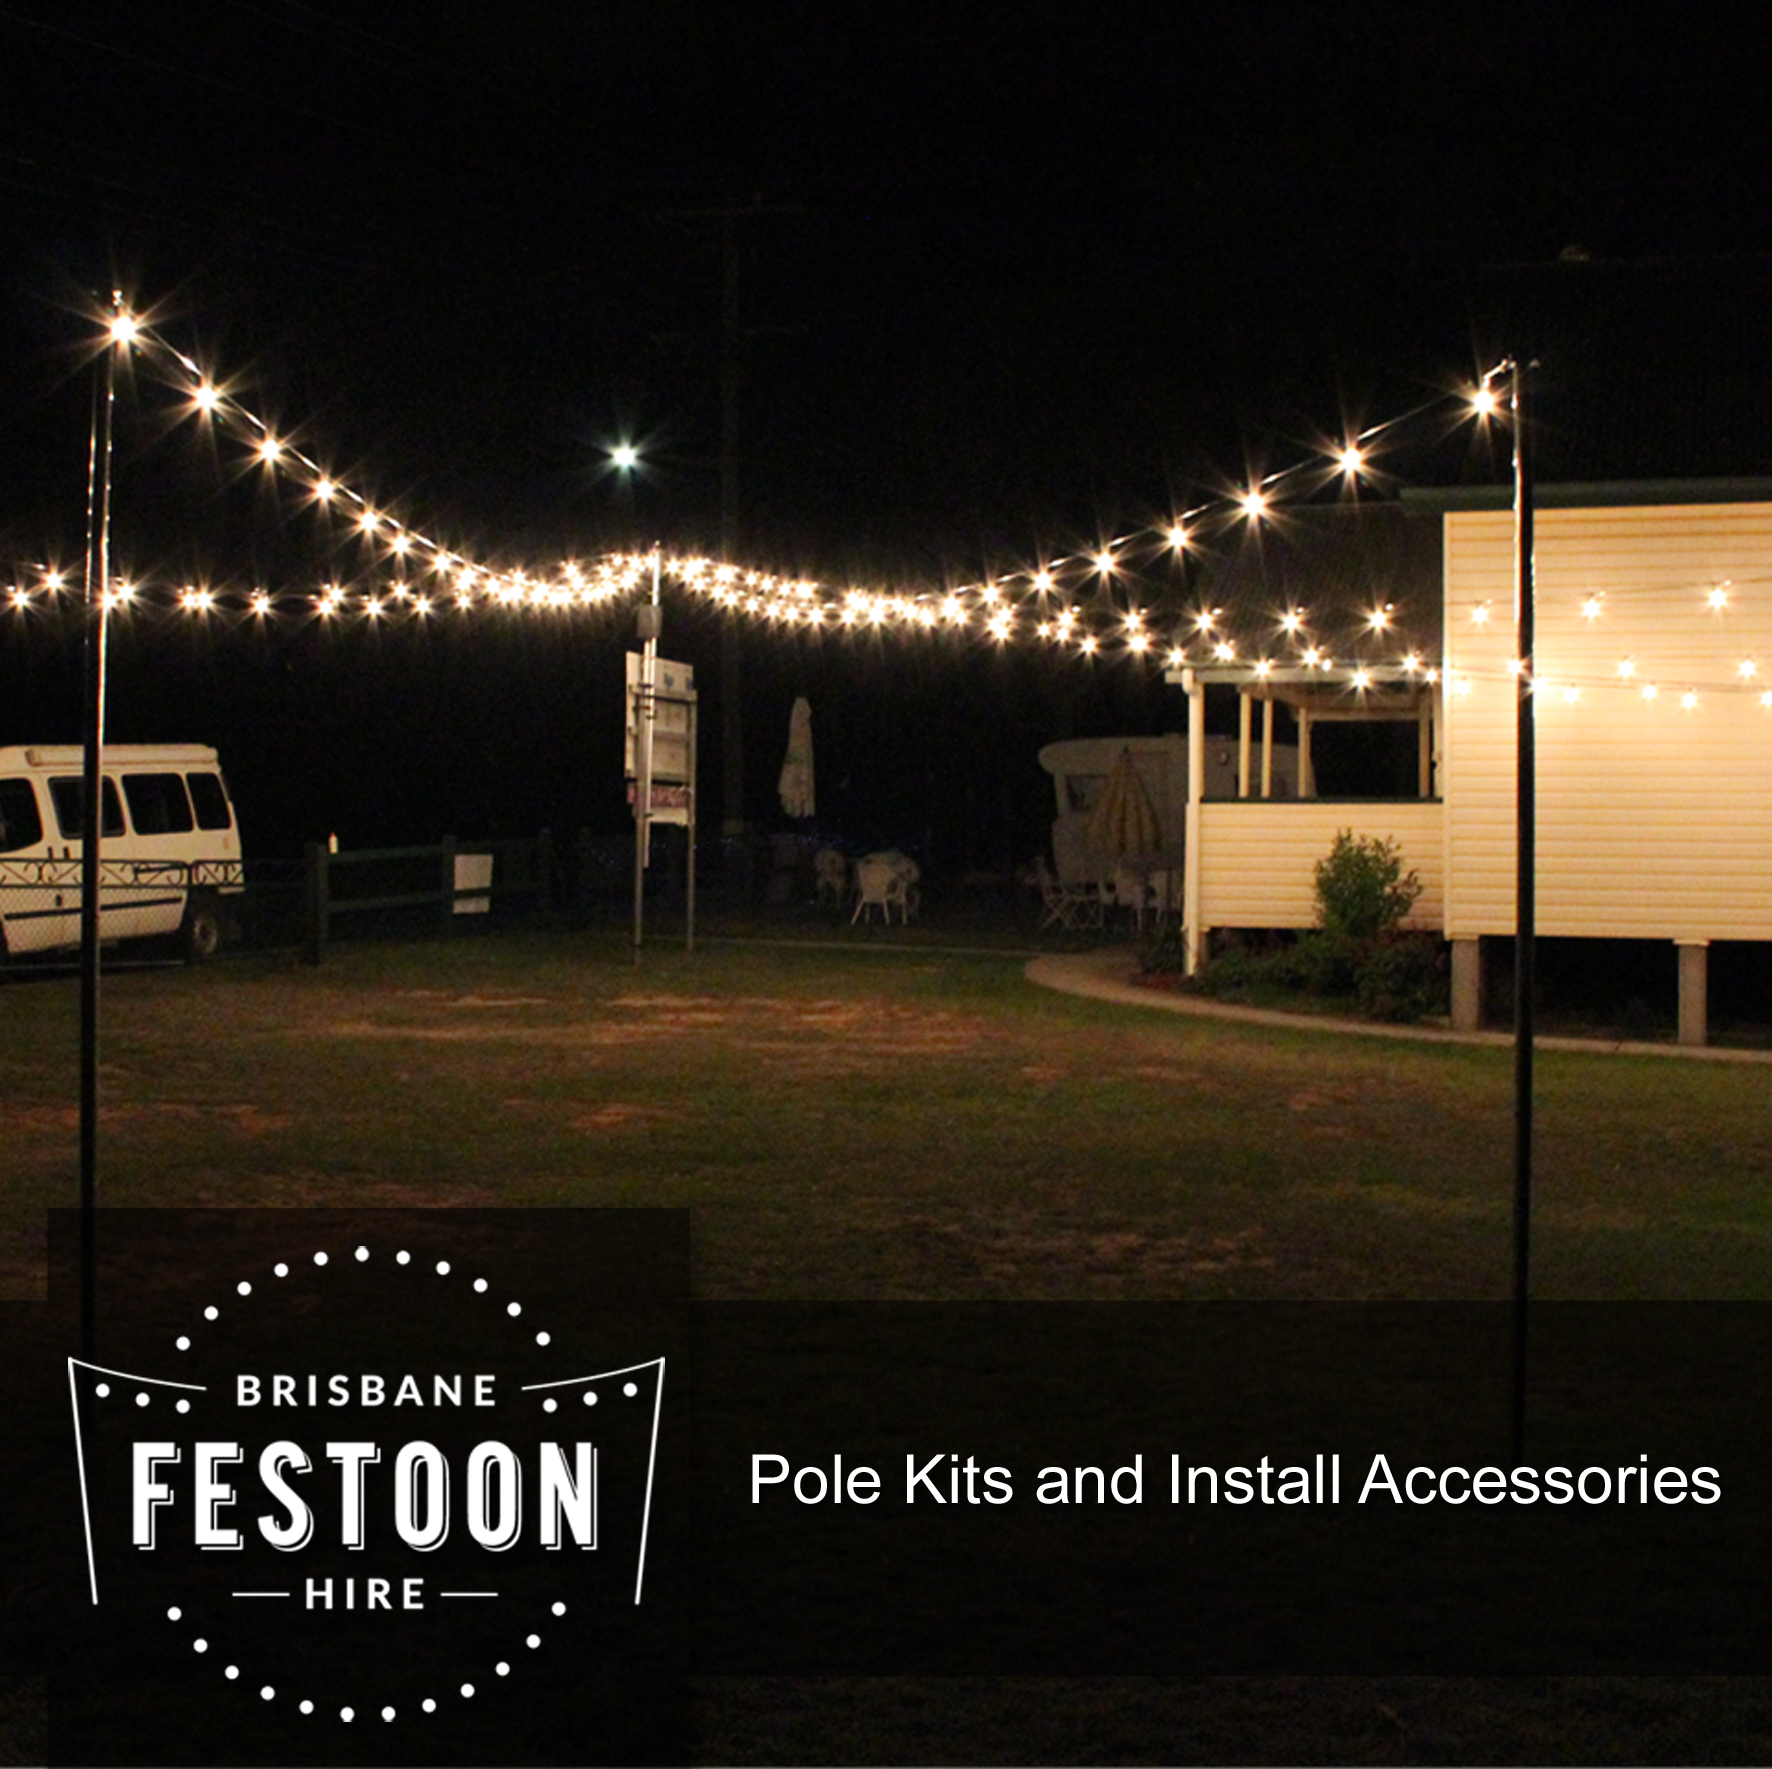 Brisbane Festoon Hire - Pole Kits and Install Accessories 3.jpg